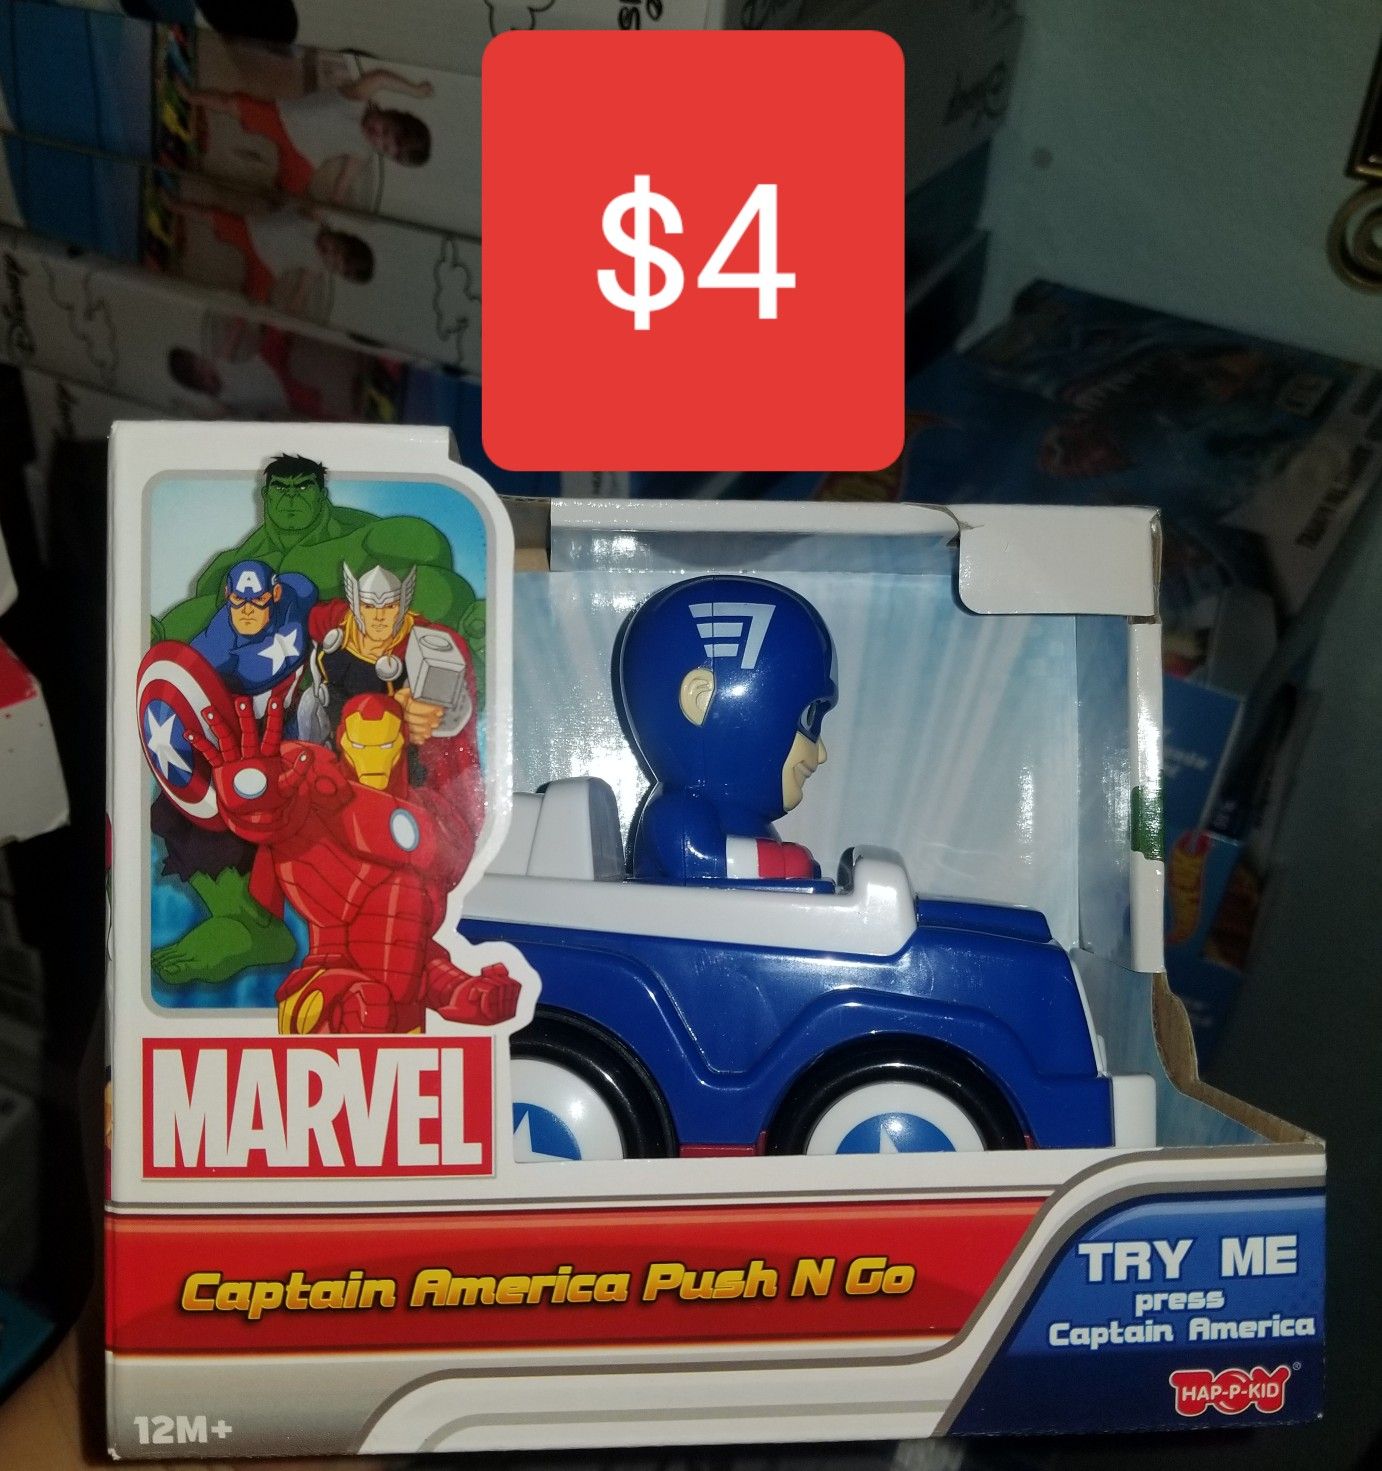 Marvel captain America push and go car